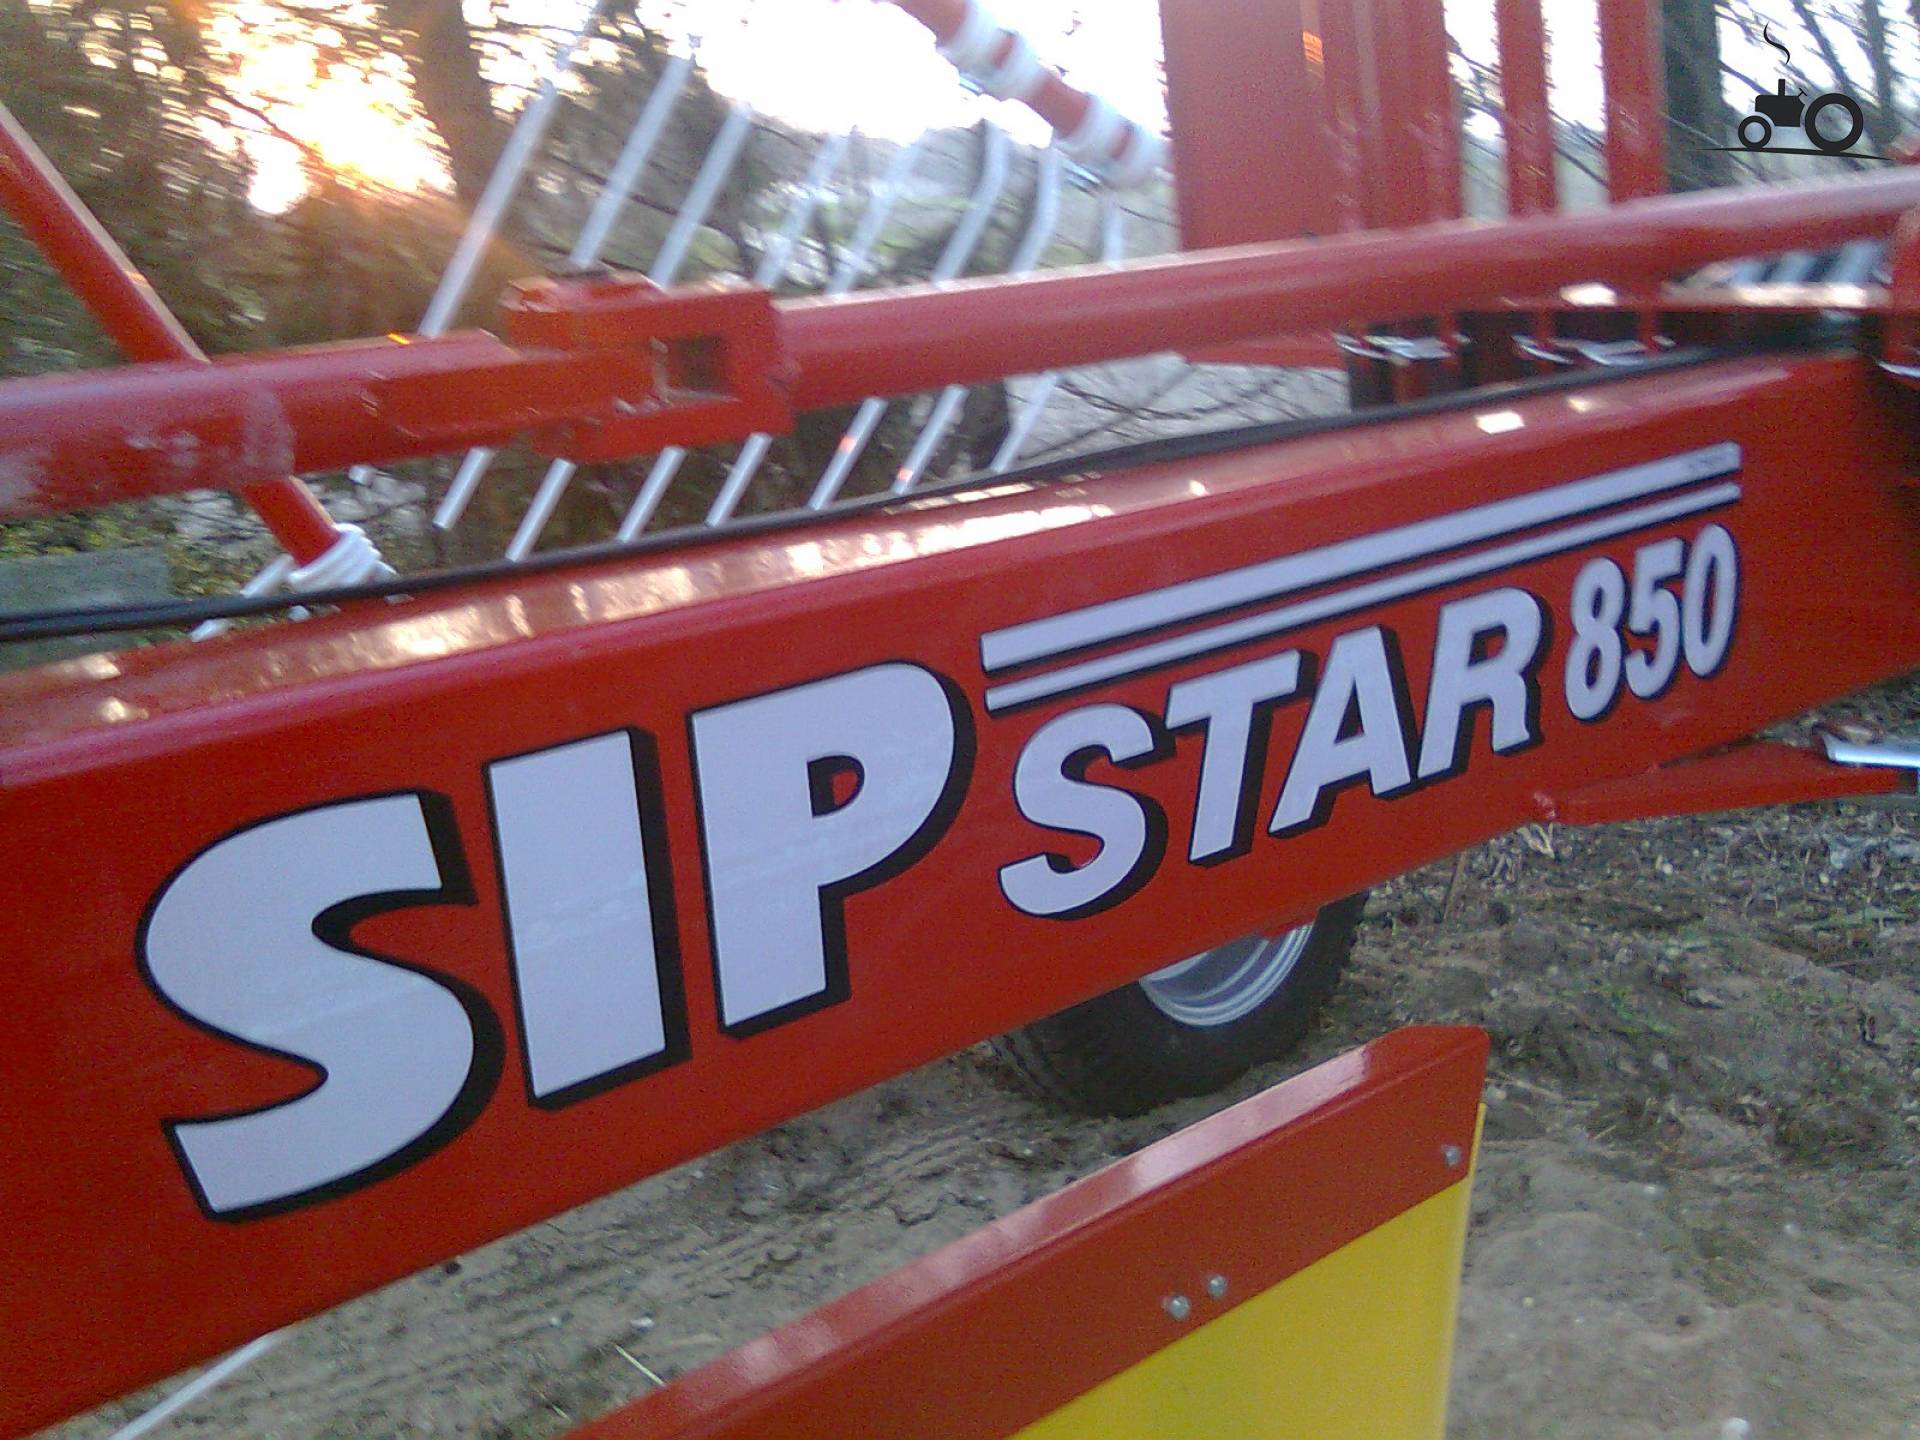 Sip Star 850